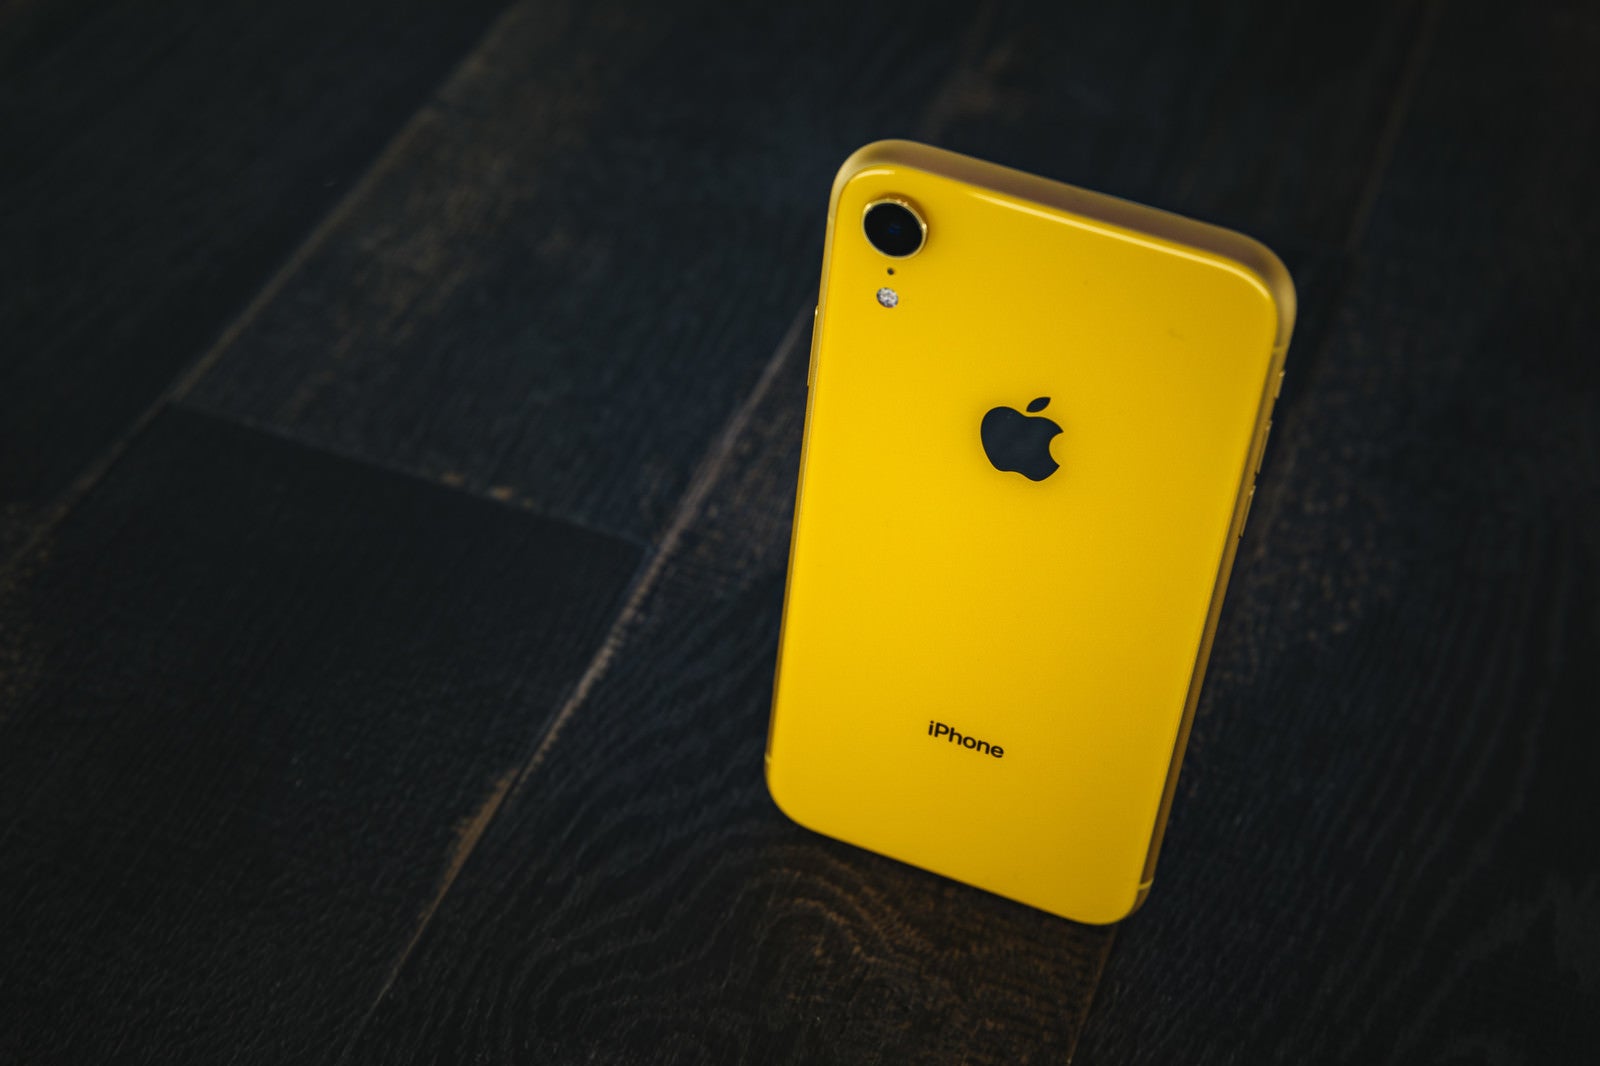 「iPhone XR yellow」の写真